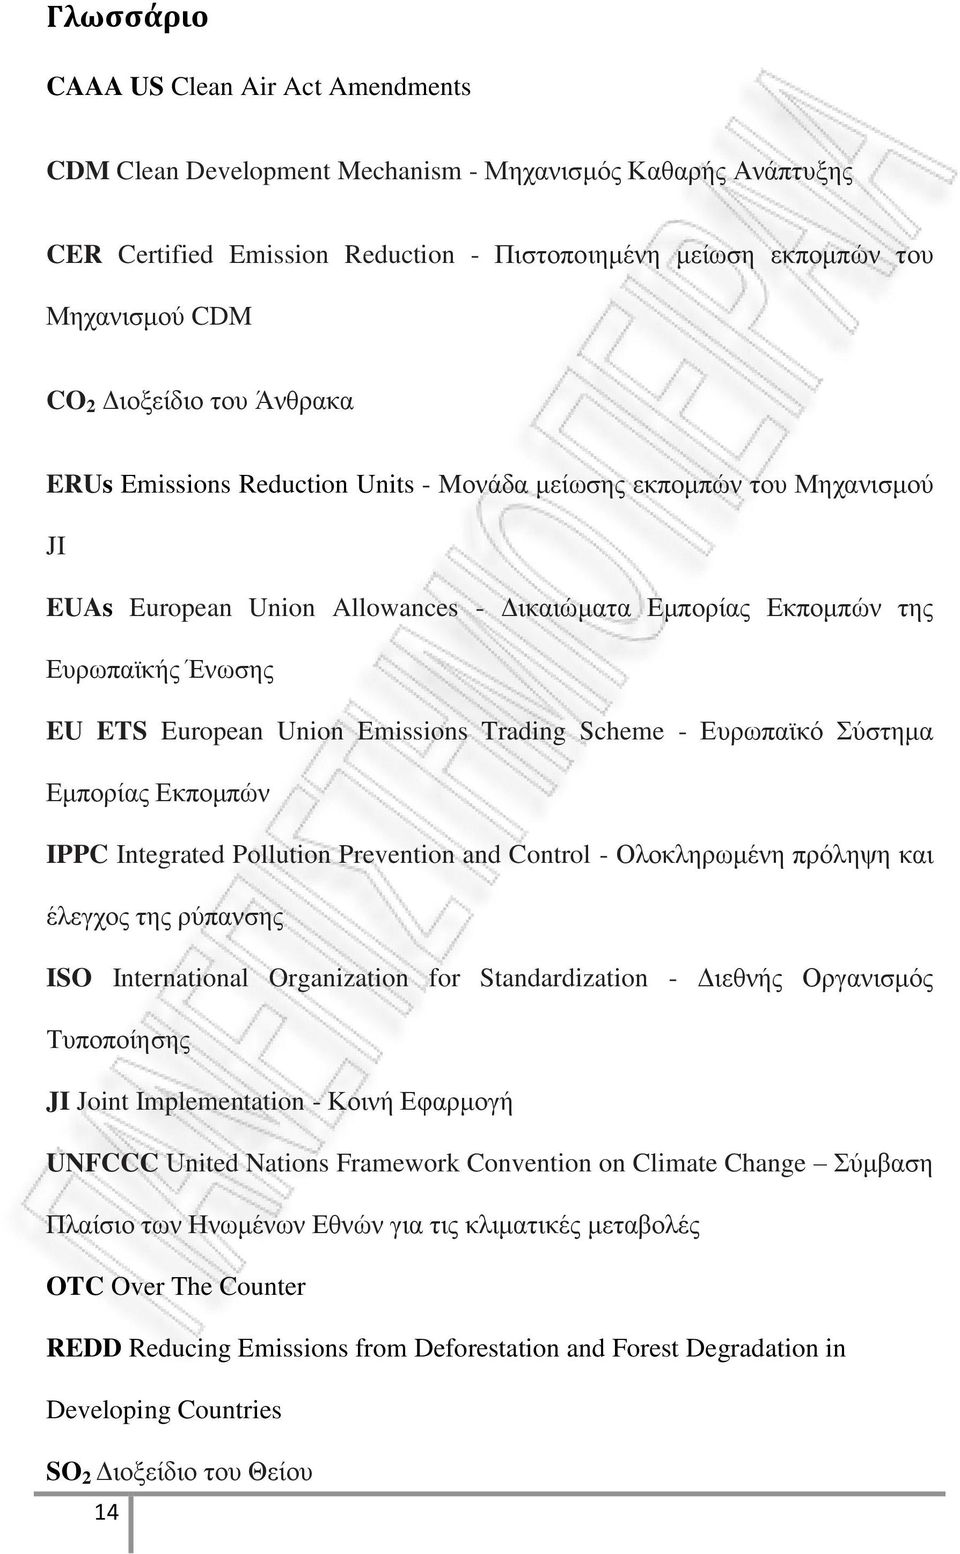 Union Emissions Trading Scheme - Ευρωπαϊκό Σύστημα Εμπορίας Εκπομπών IPPC Integrated Pollution Prevention and Control - Ολοκληρωμένη πρόληψη και έλεγχος της ρύπανσης ISO International Organization